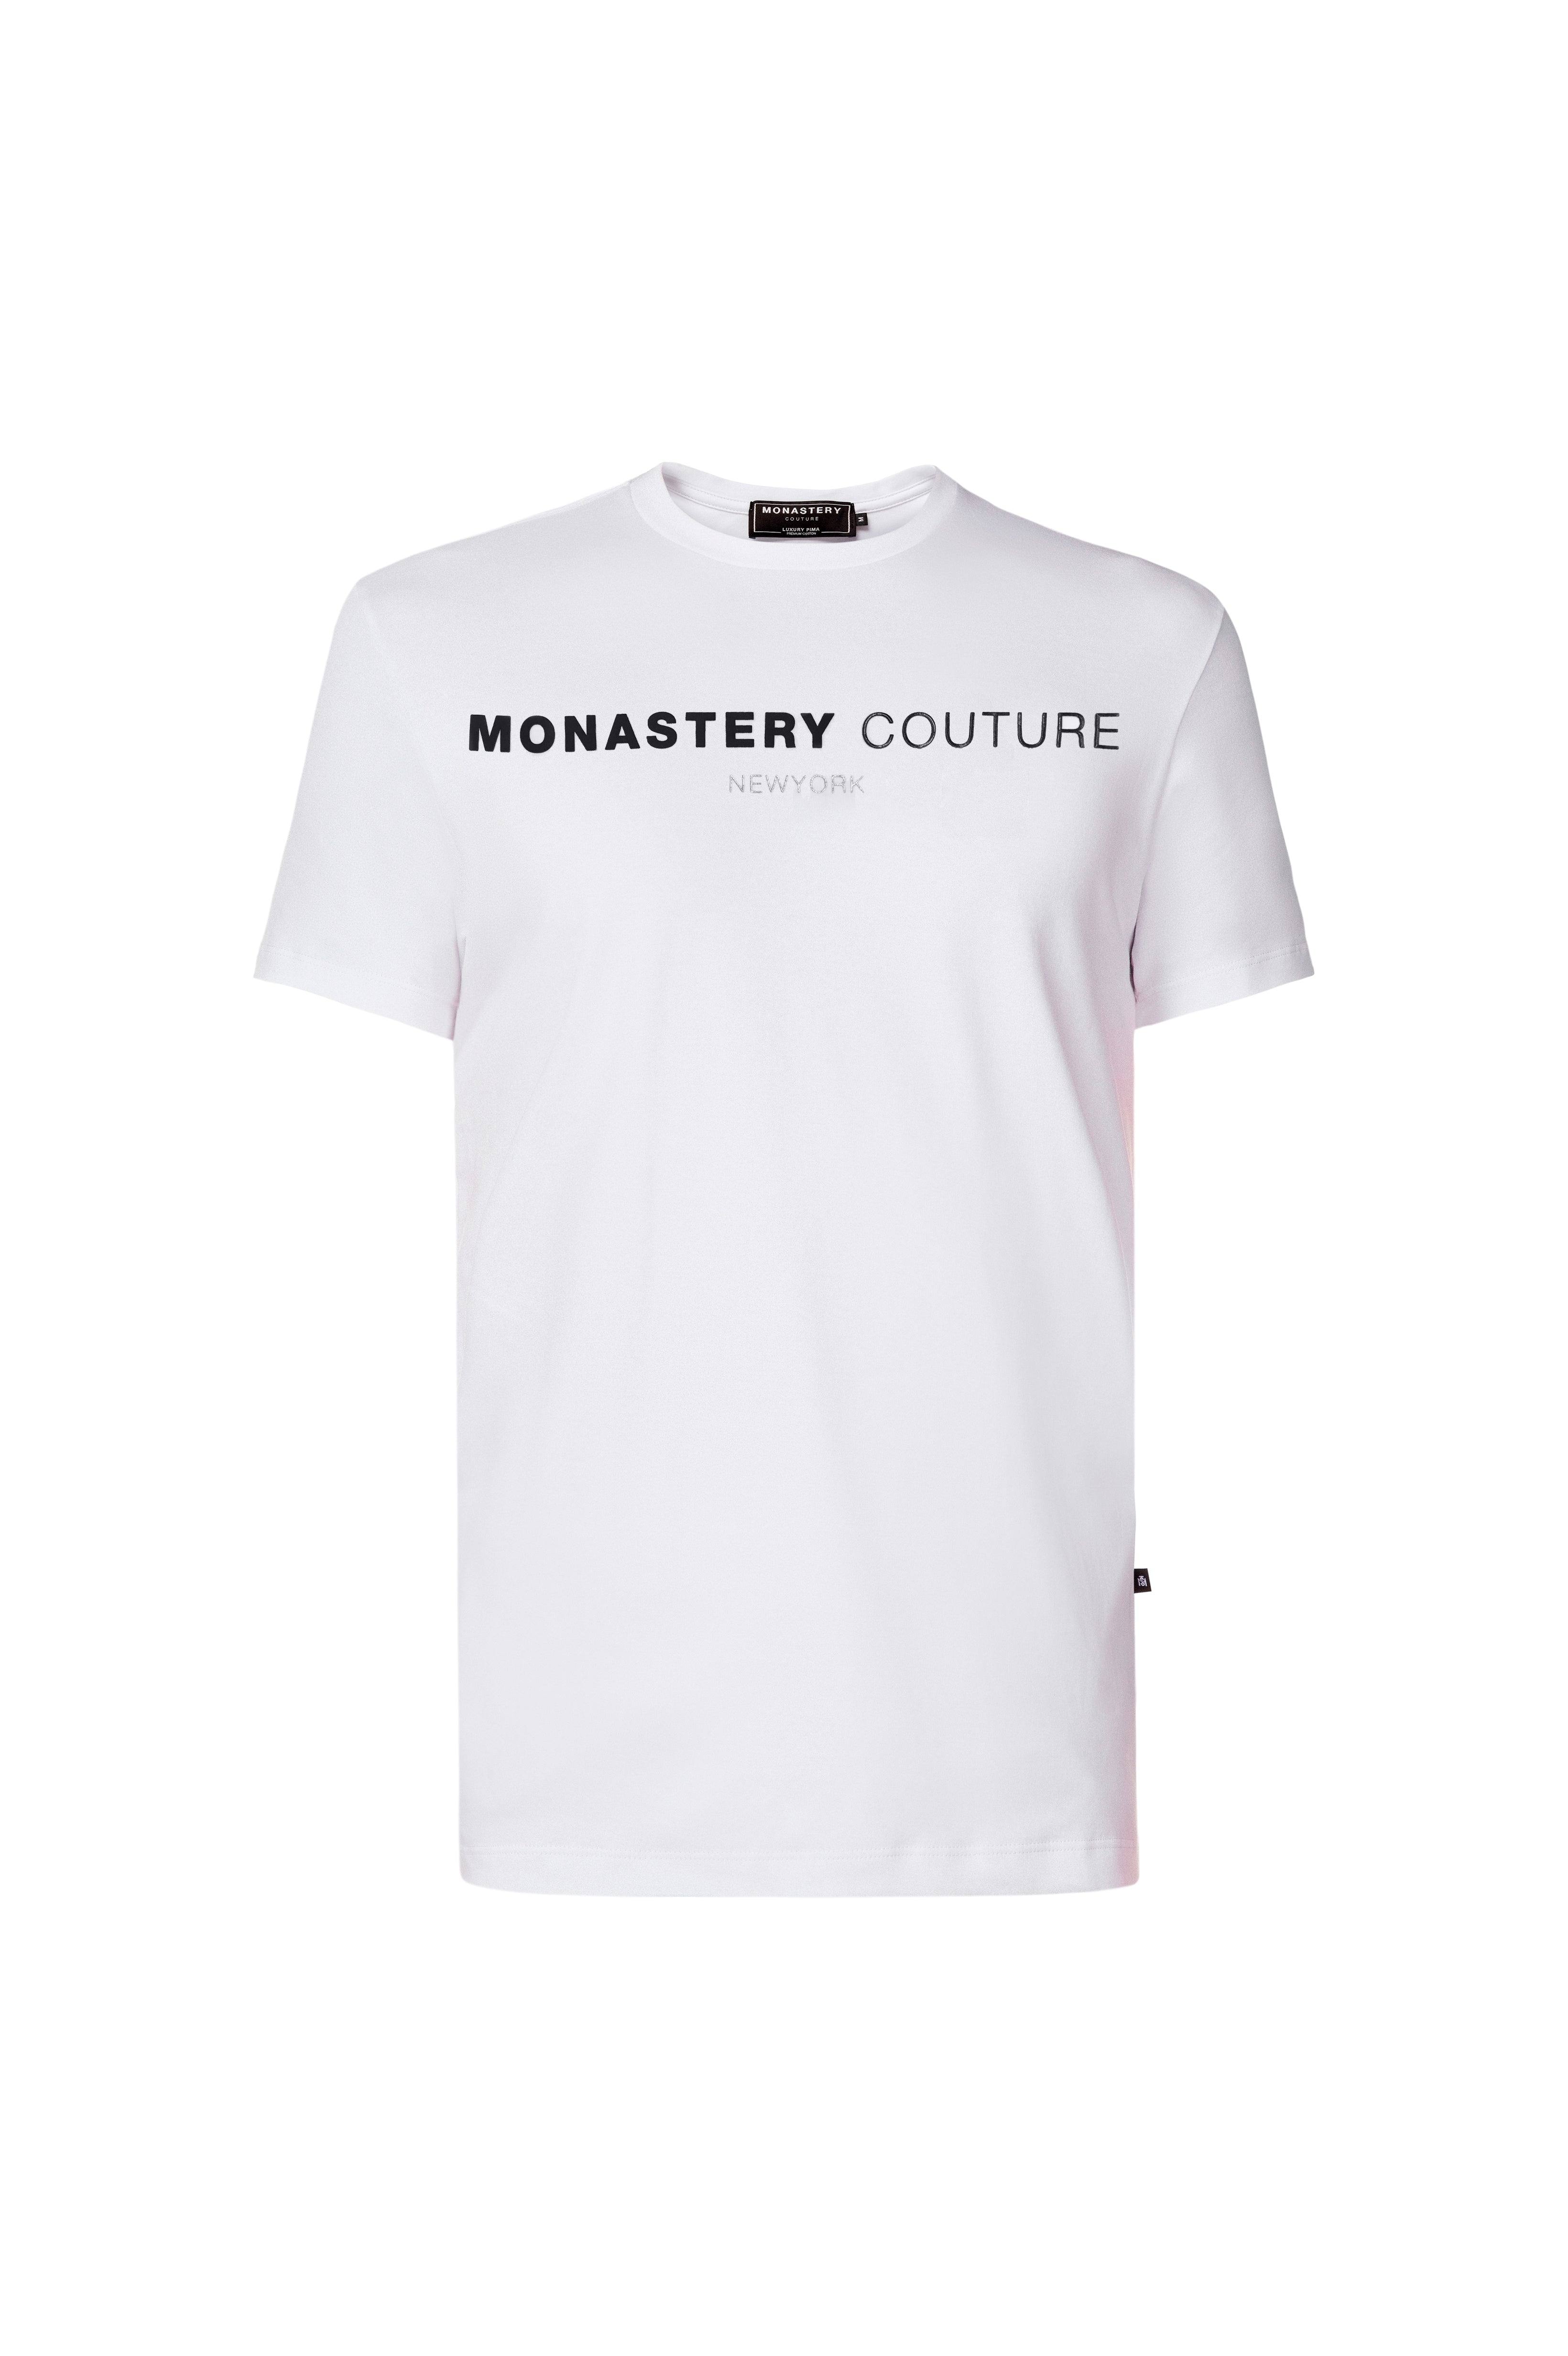 DOMENICO T-SHIRT WHITE | Monastery Couture